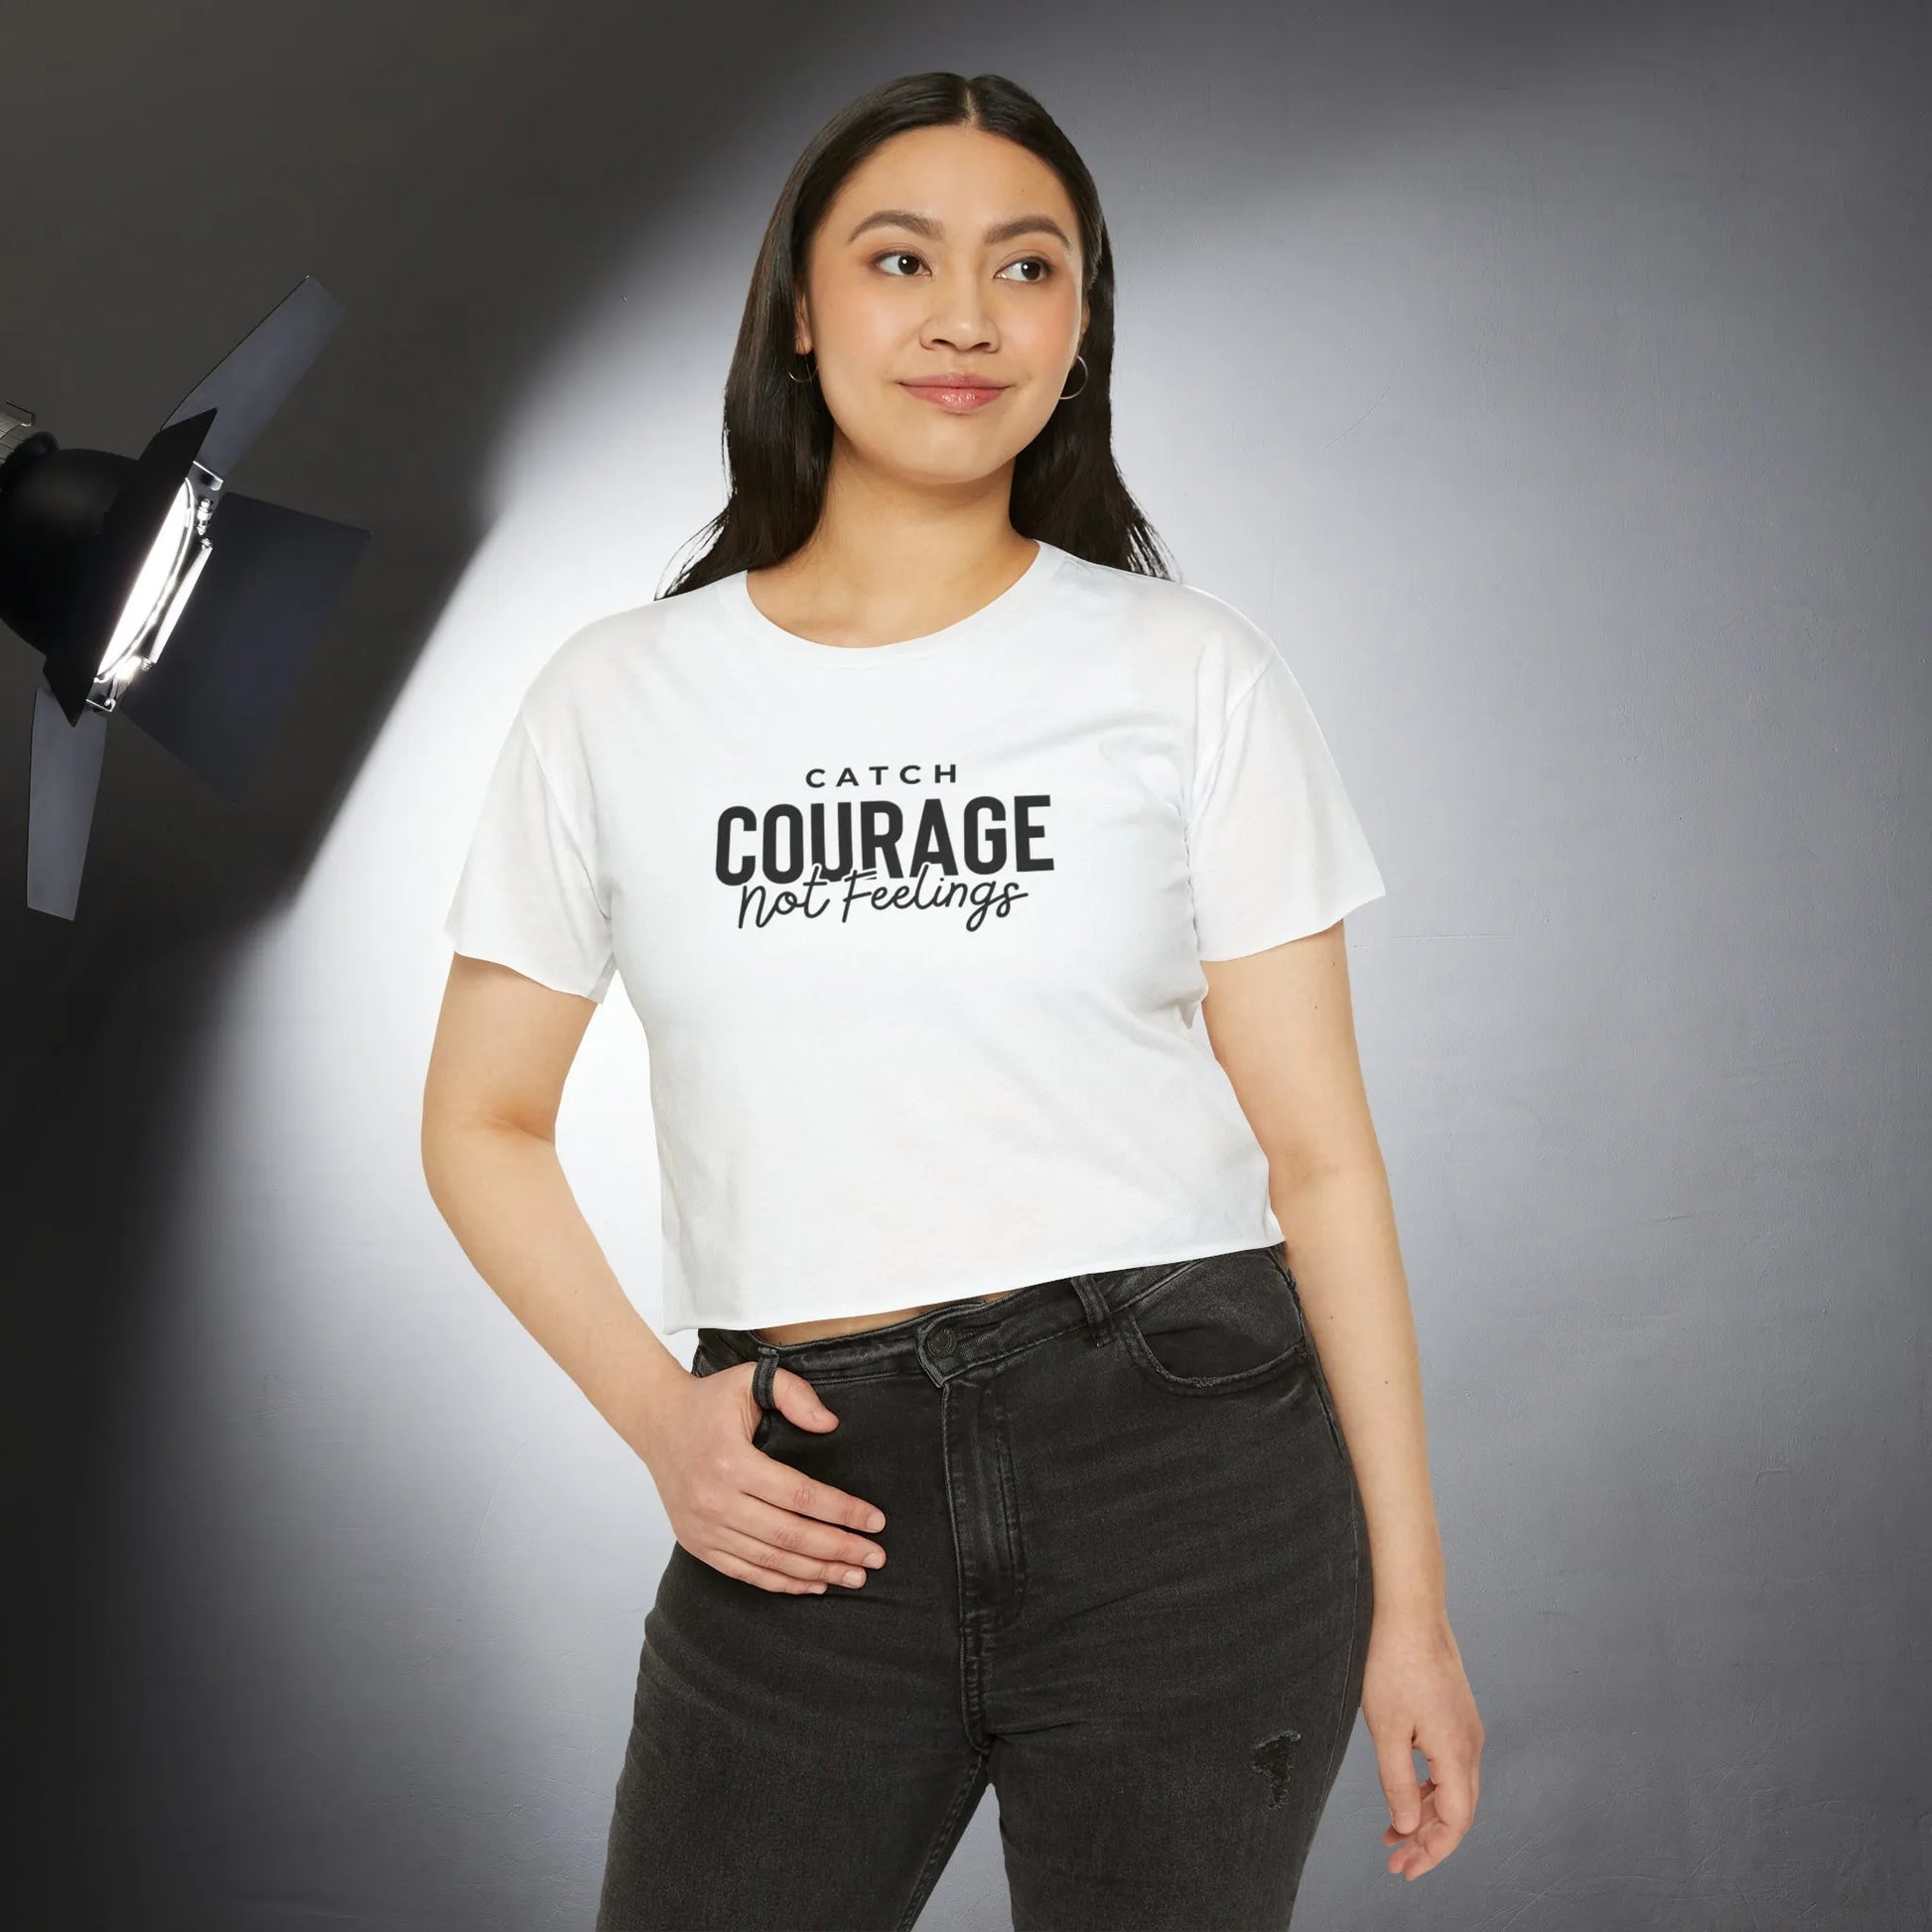 Catch Courage Not Feelings Crop Top - Trendy Women's Top White